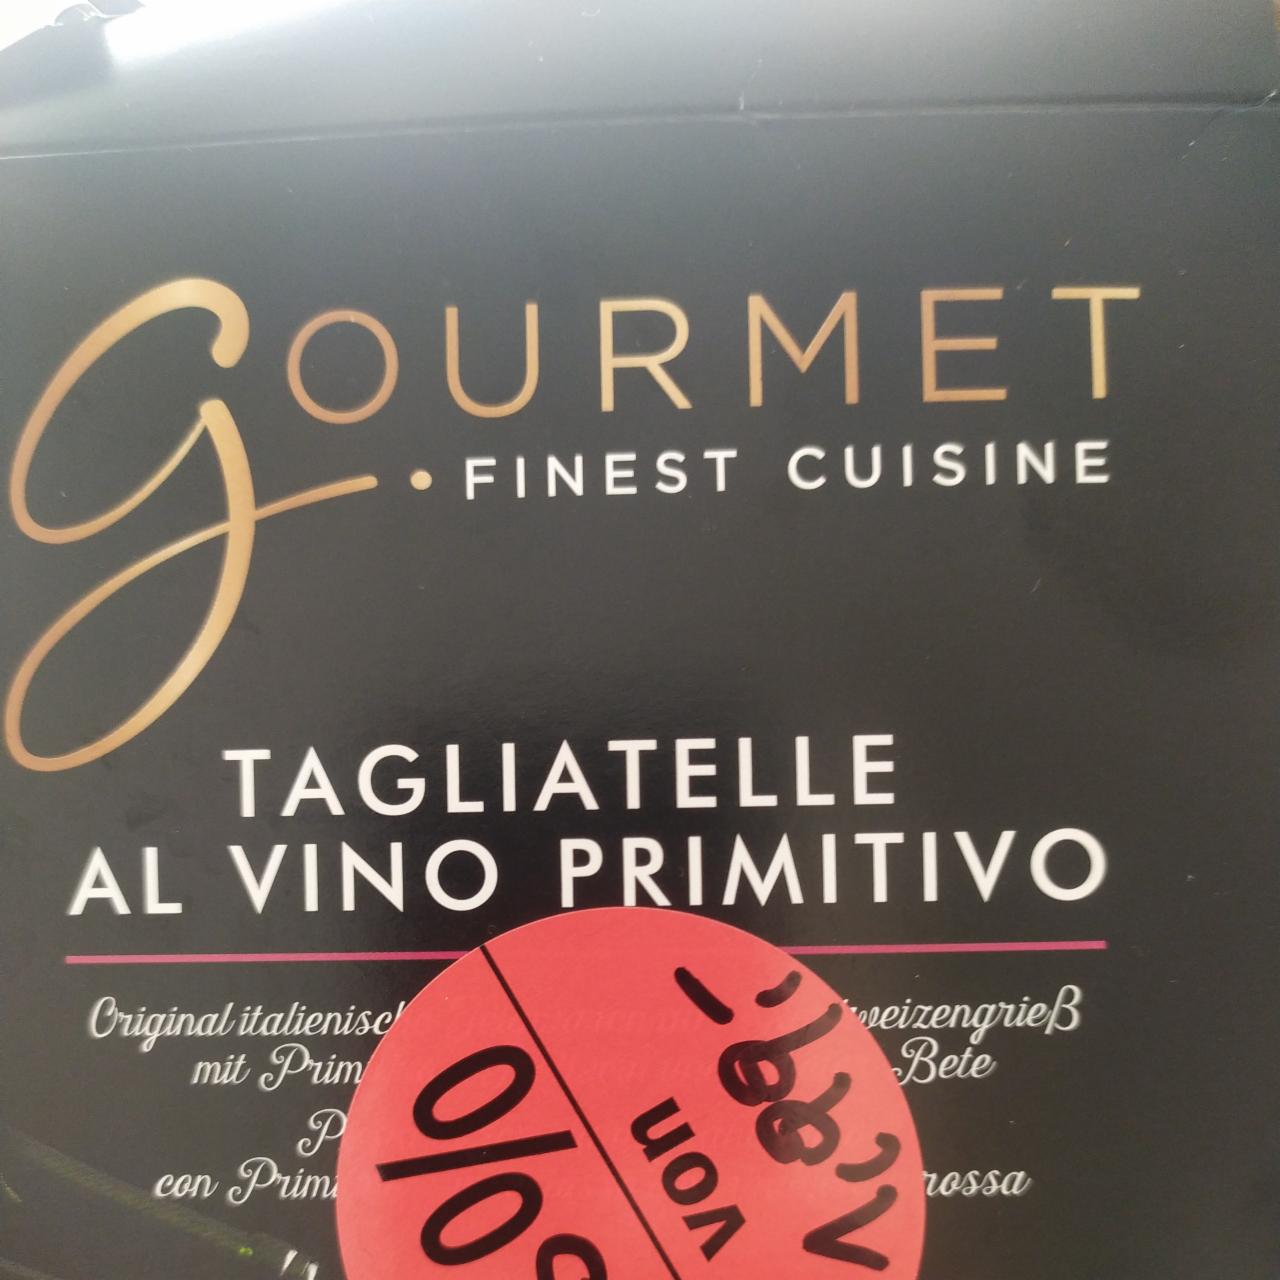 Fotografie - Tagliatelle al vino primitivo Gourmet finest cuisine